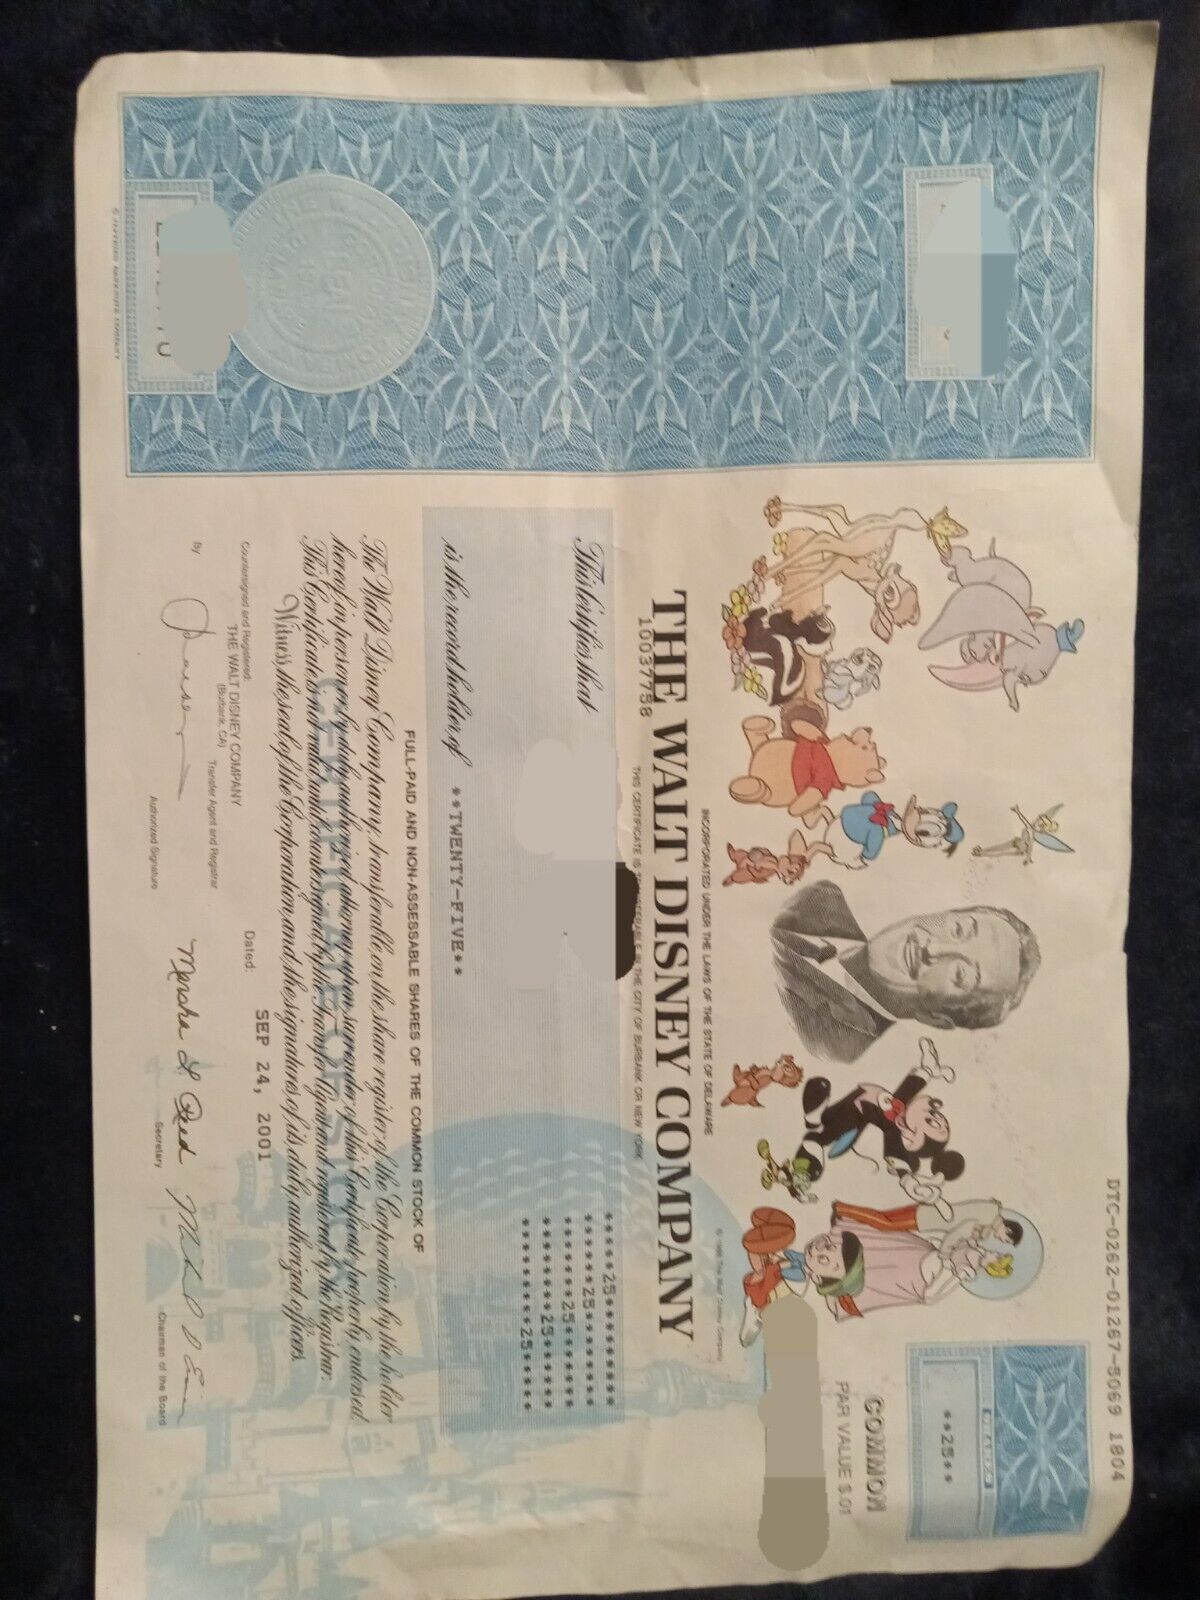 The Walt Disney Certificate